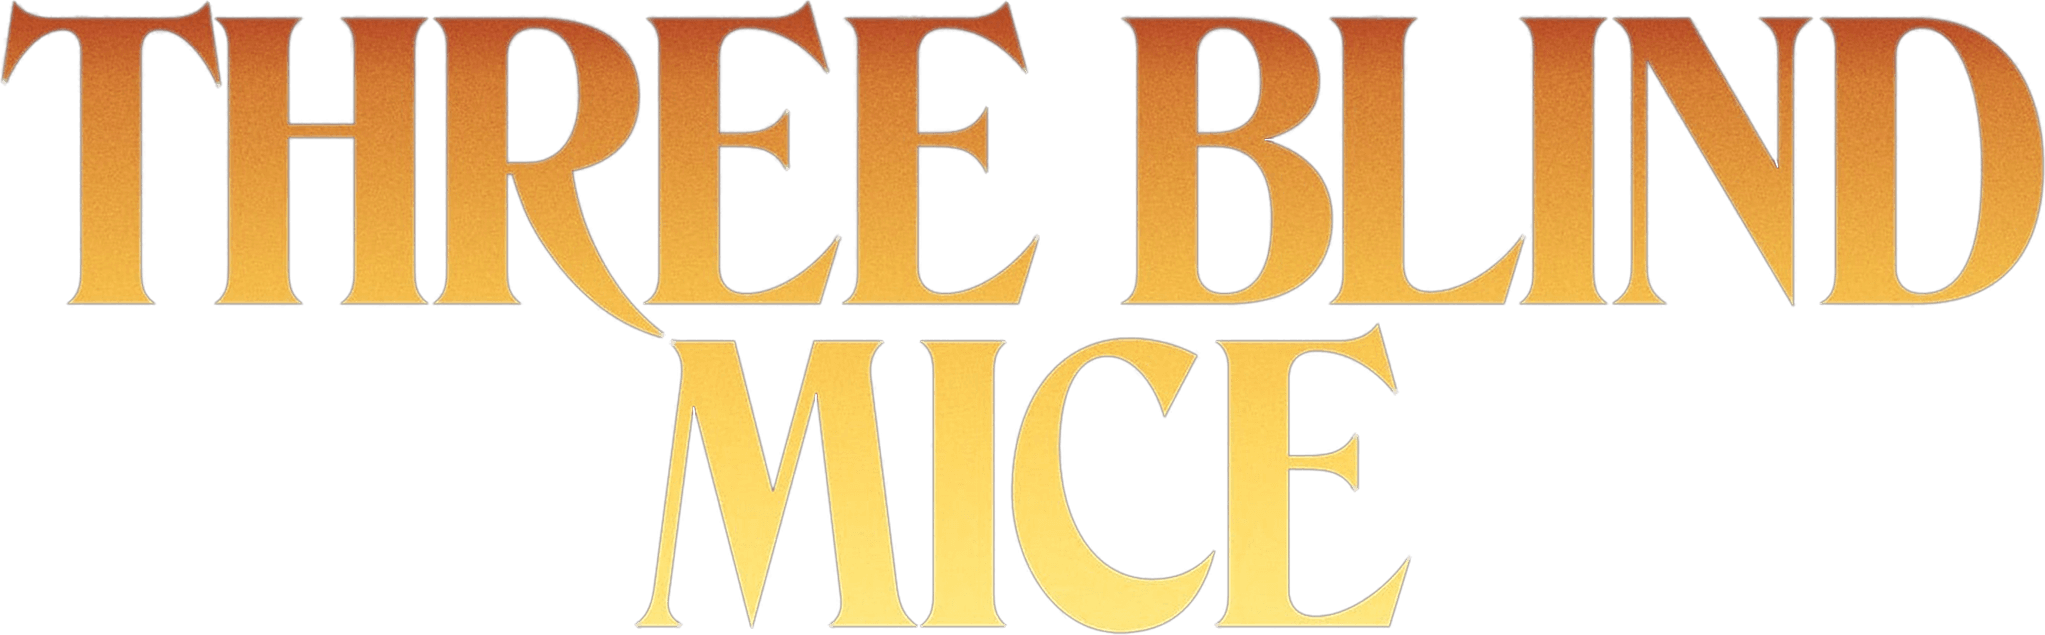 Three Blind Mice logo